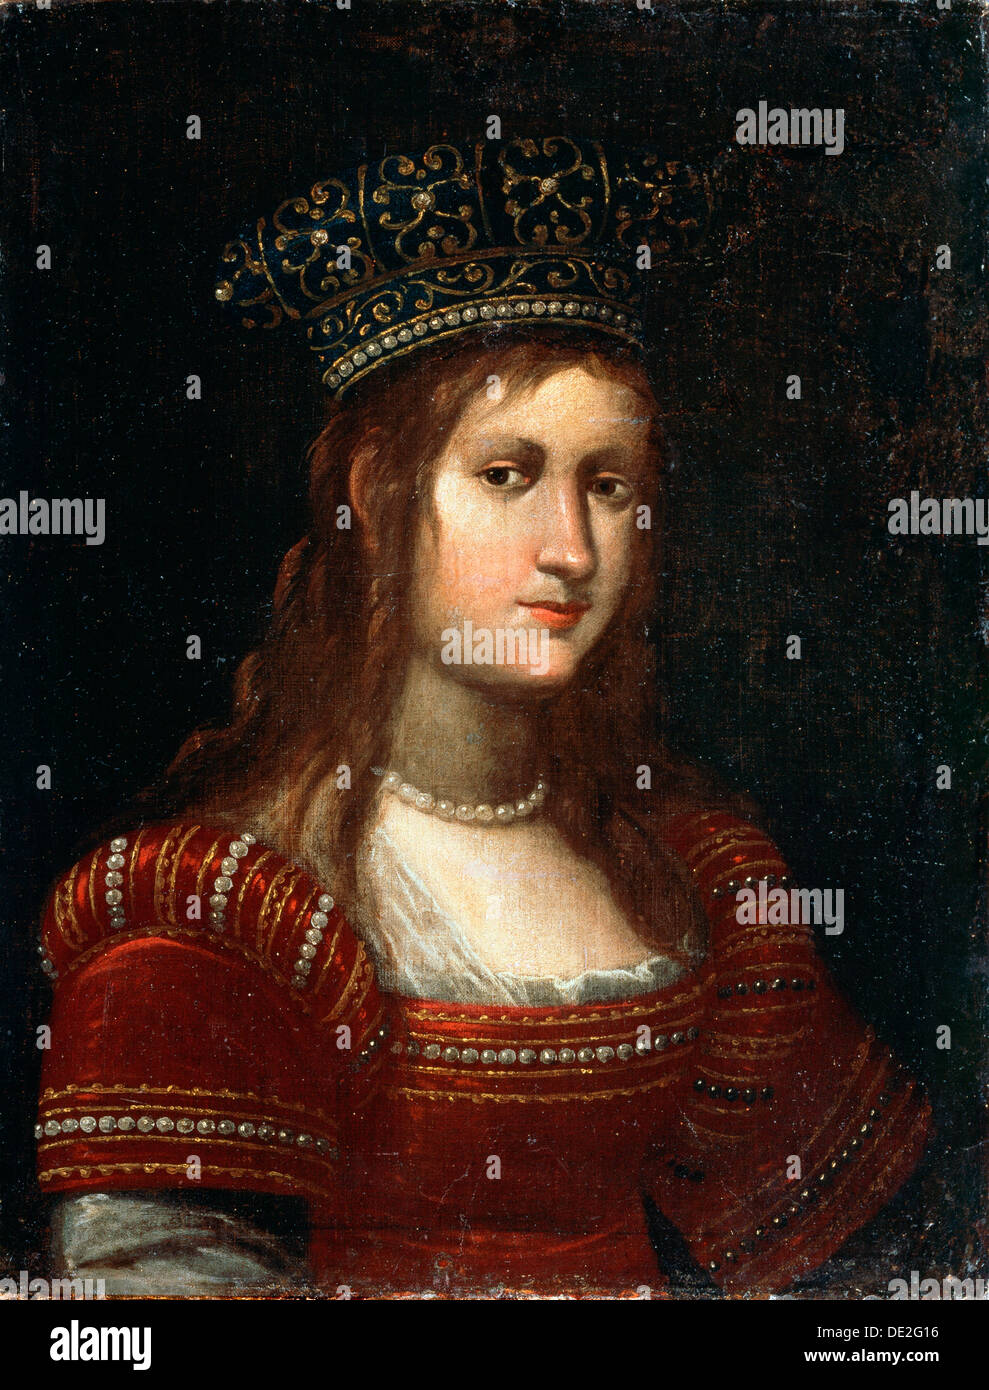 'Portrait of Archduchess Maria Magdalena of Austria', 17th century. Artist: Justus Sustermans Stock Photo